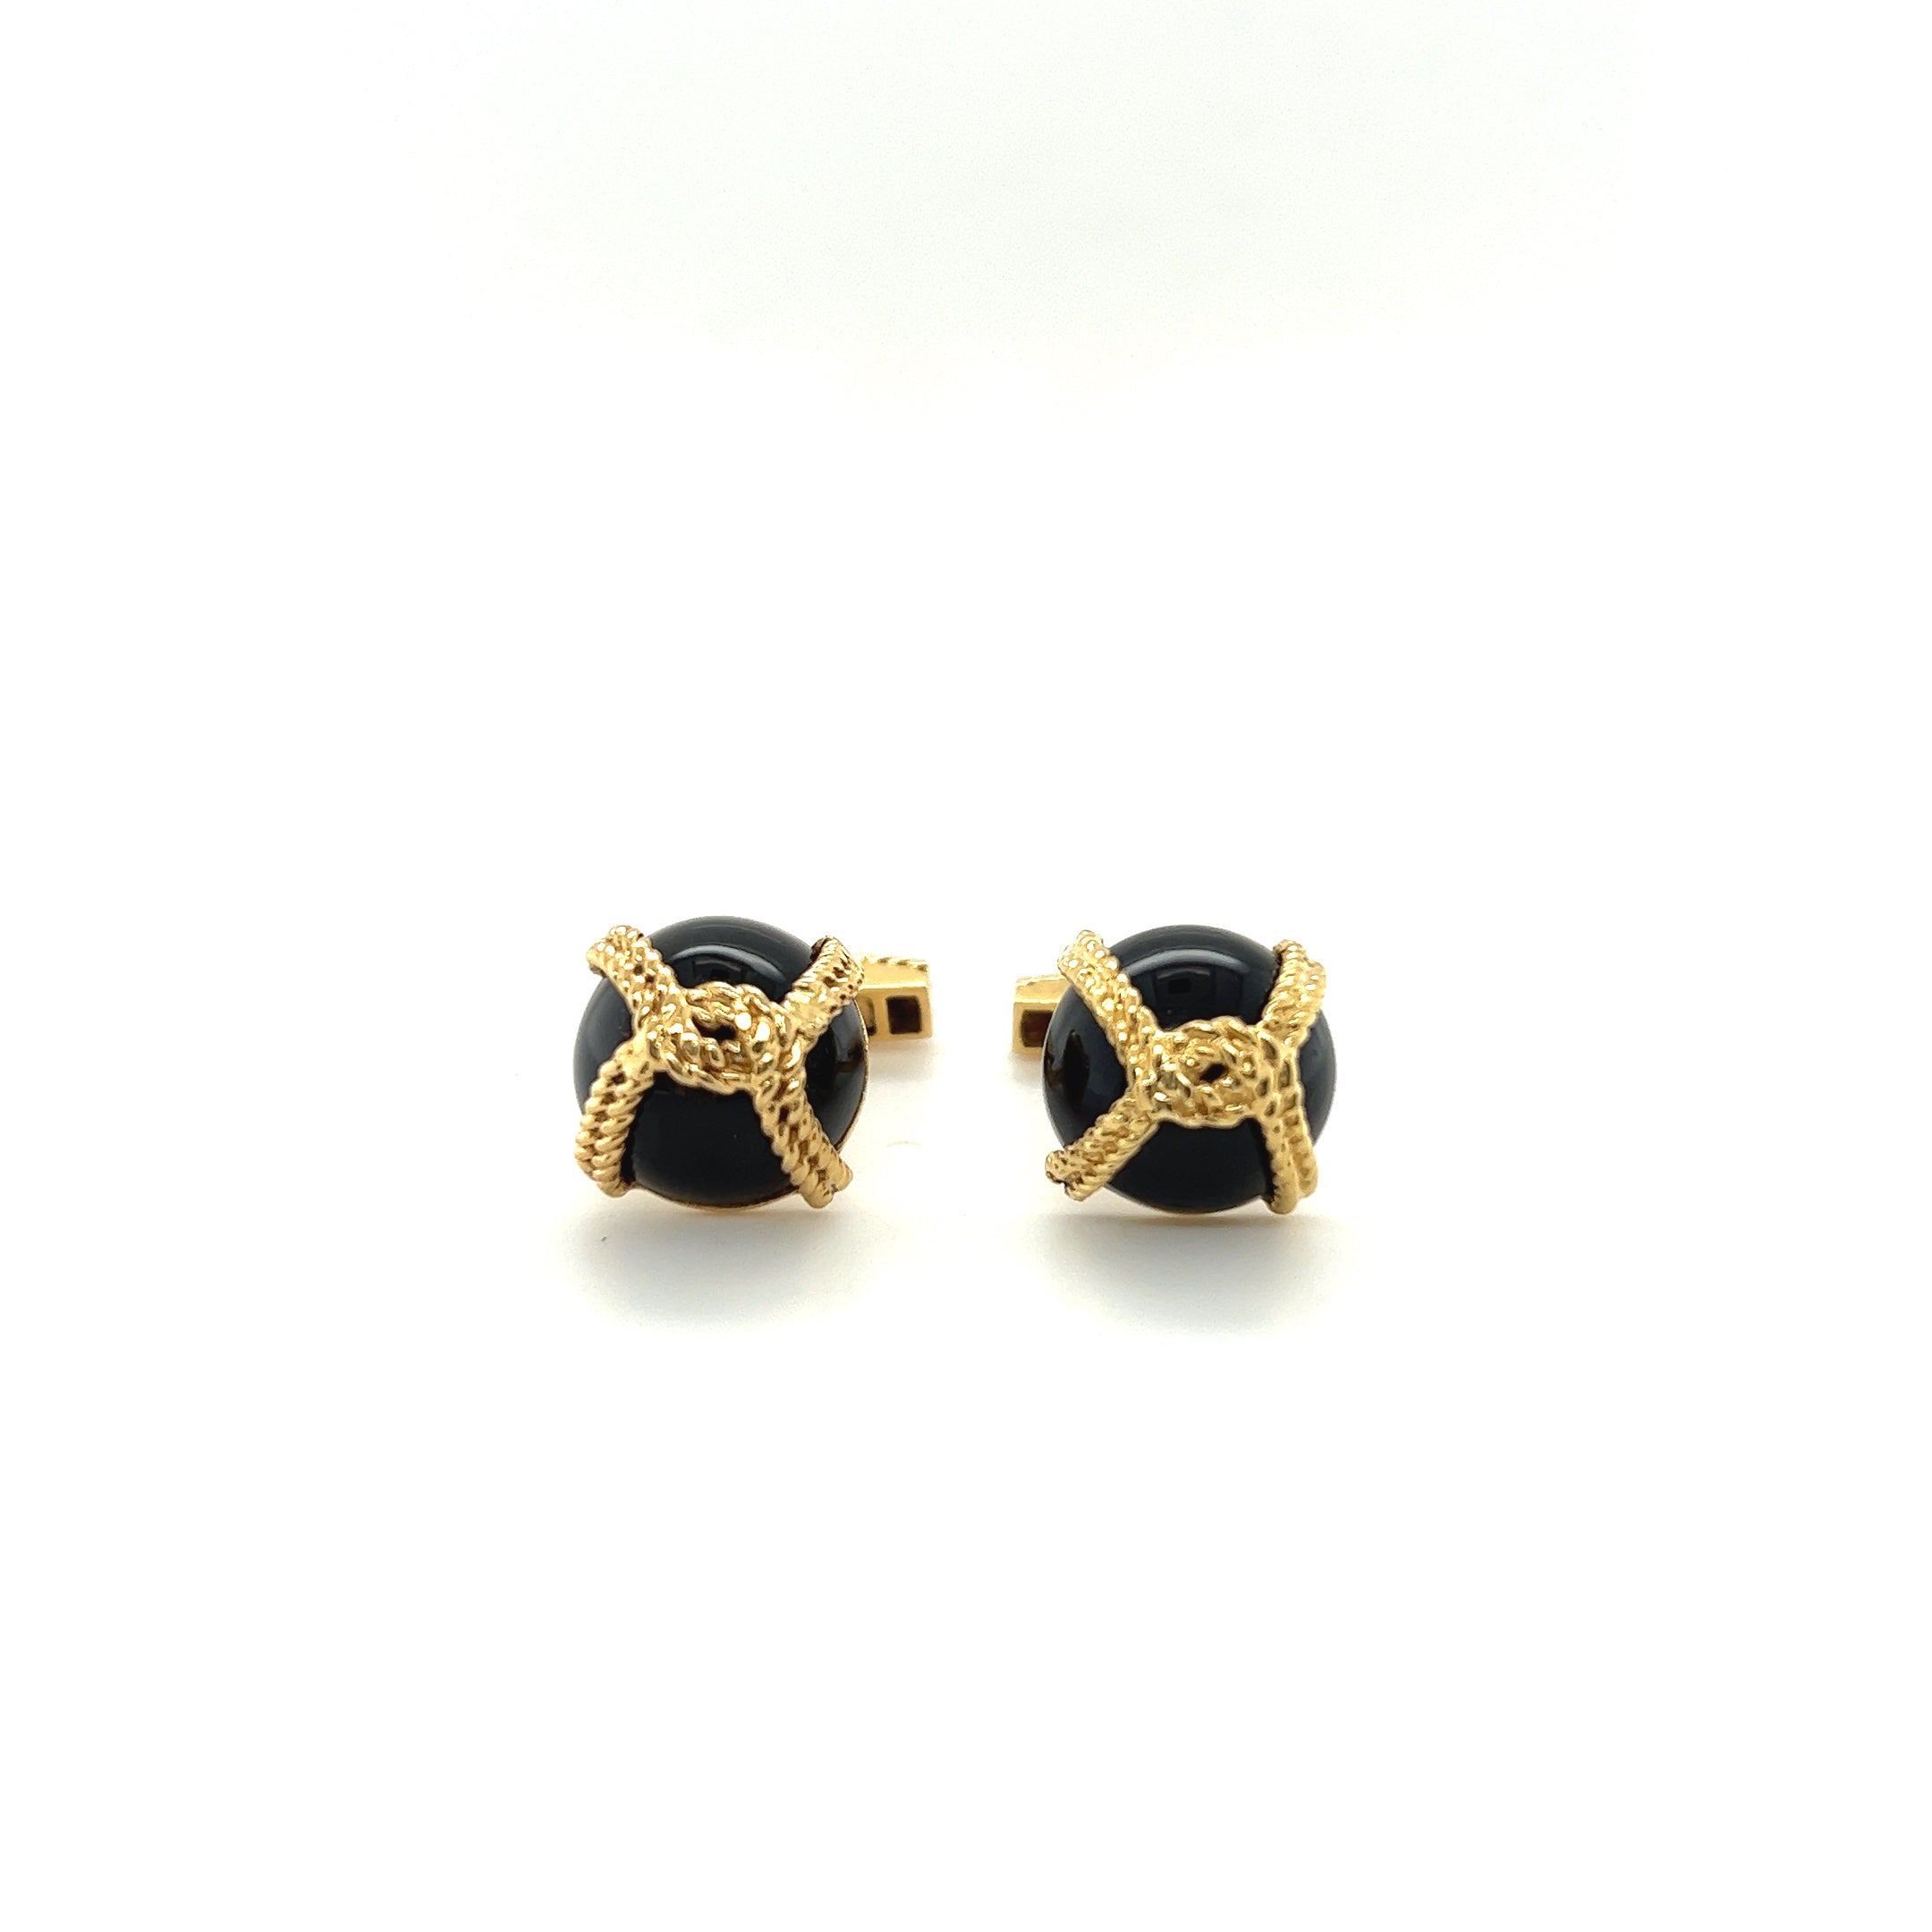 Tiffany & Co Onyx & 14K Yellow Gold Cufflinks - The Verma Group